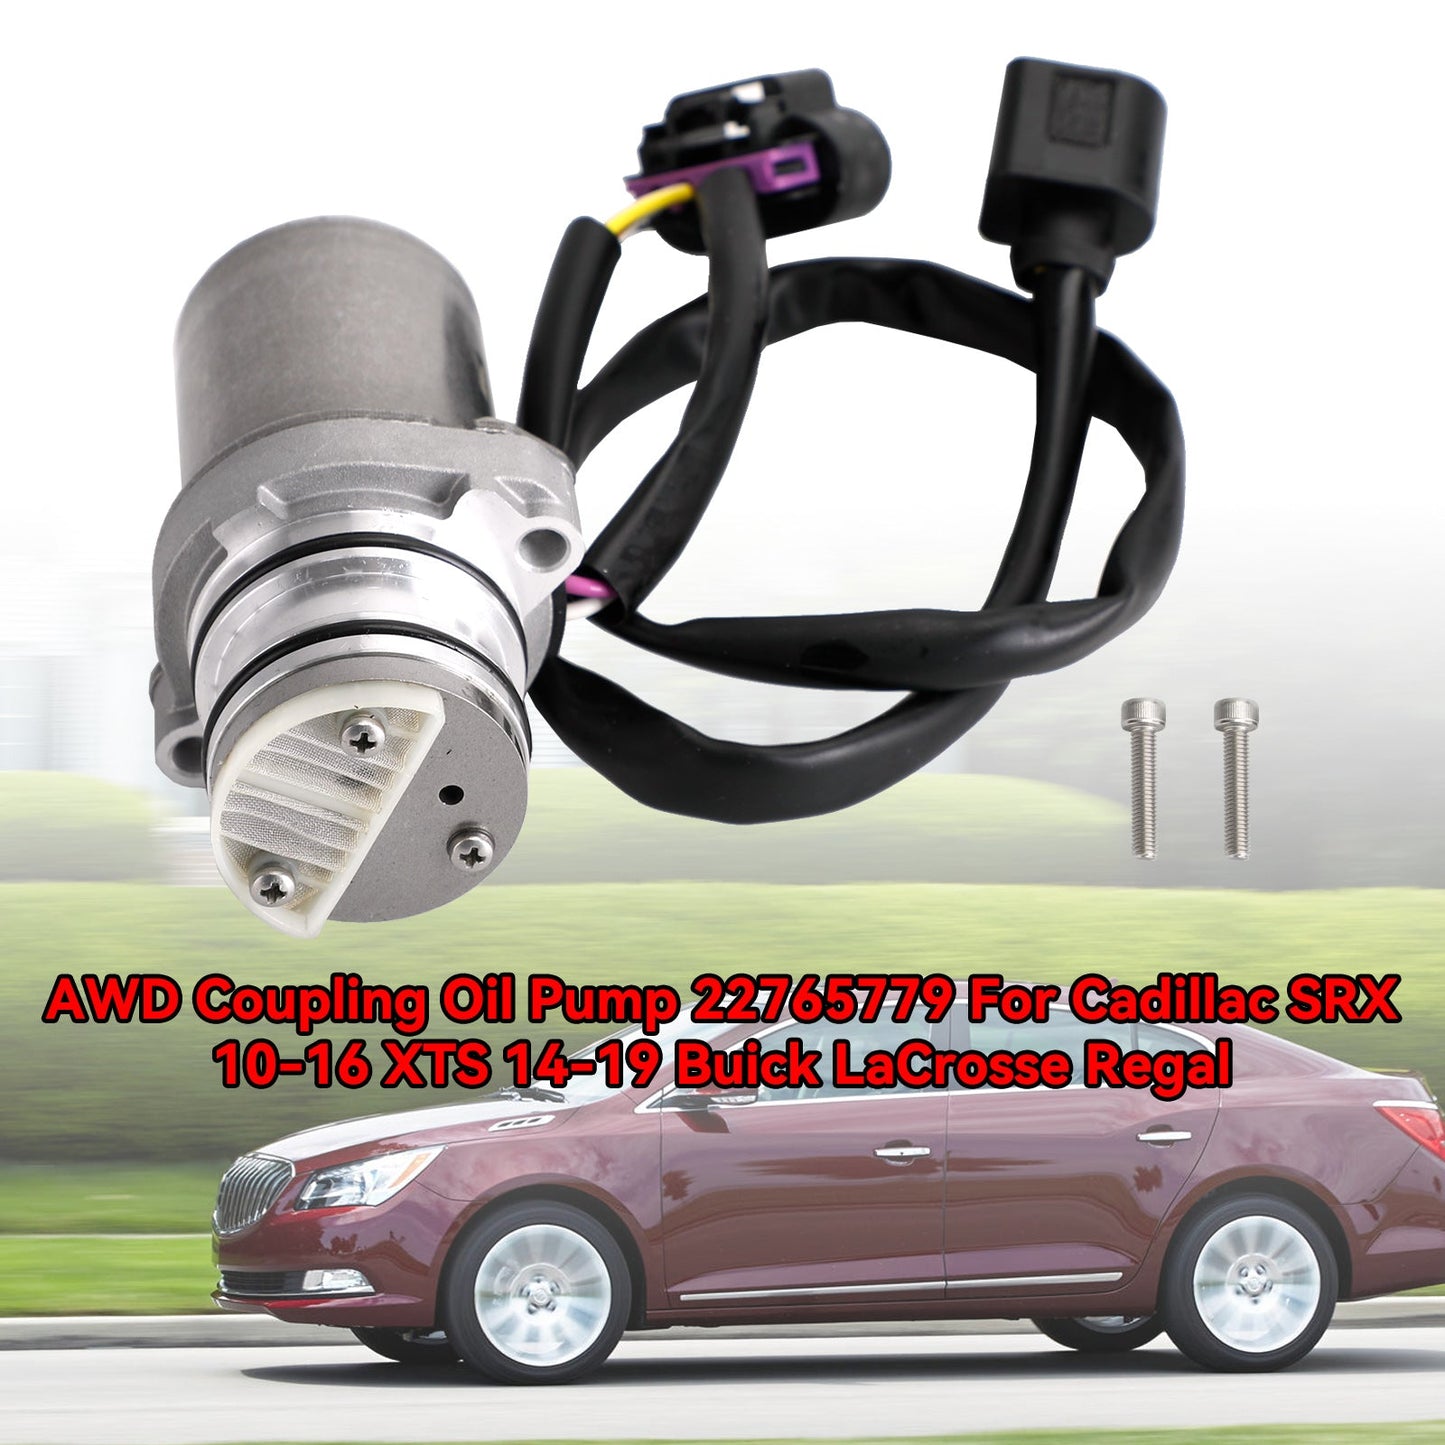 2011-2016 AWD Buick LaCrosse V6 3.6L Coupling Oil Pump 22765779 404029 13285796 699000